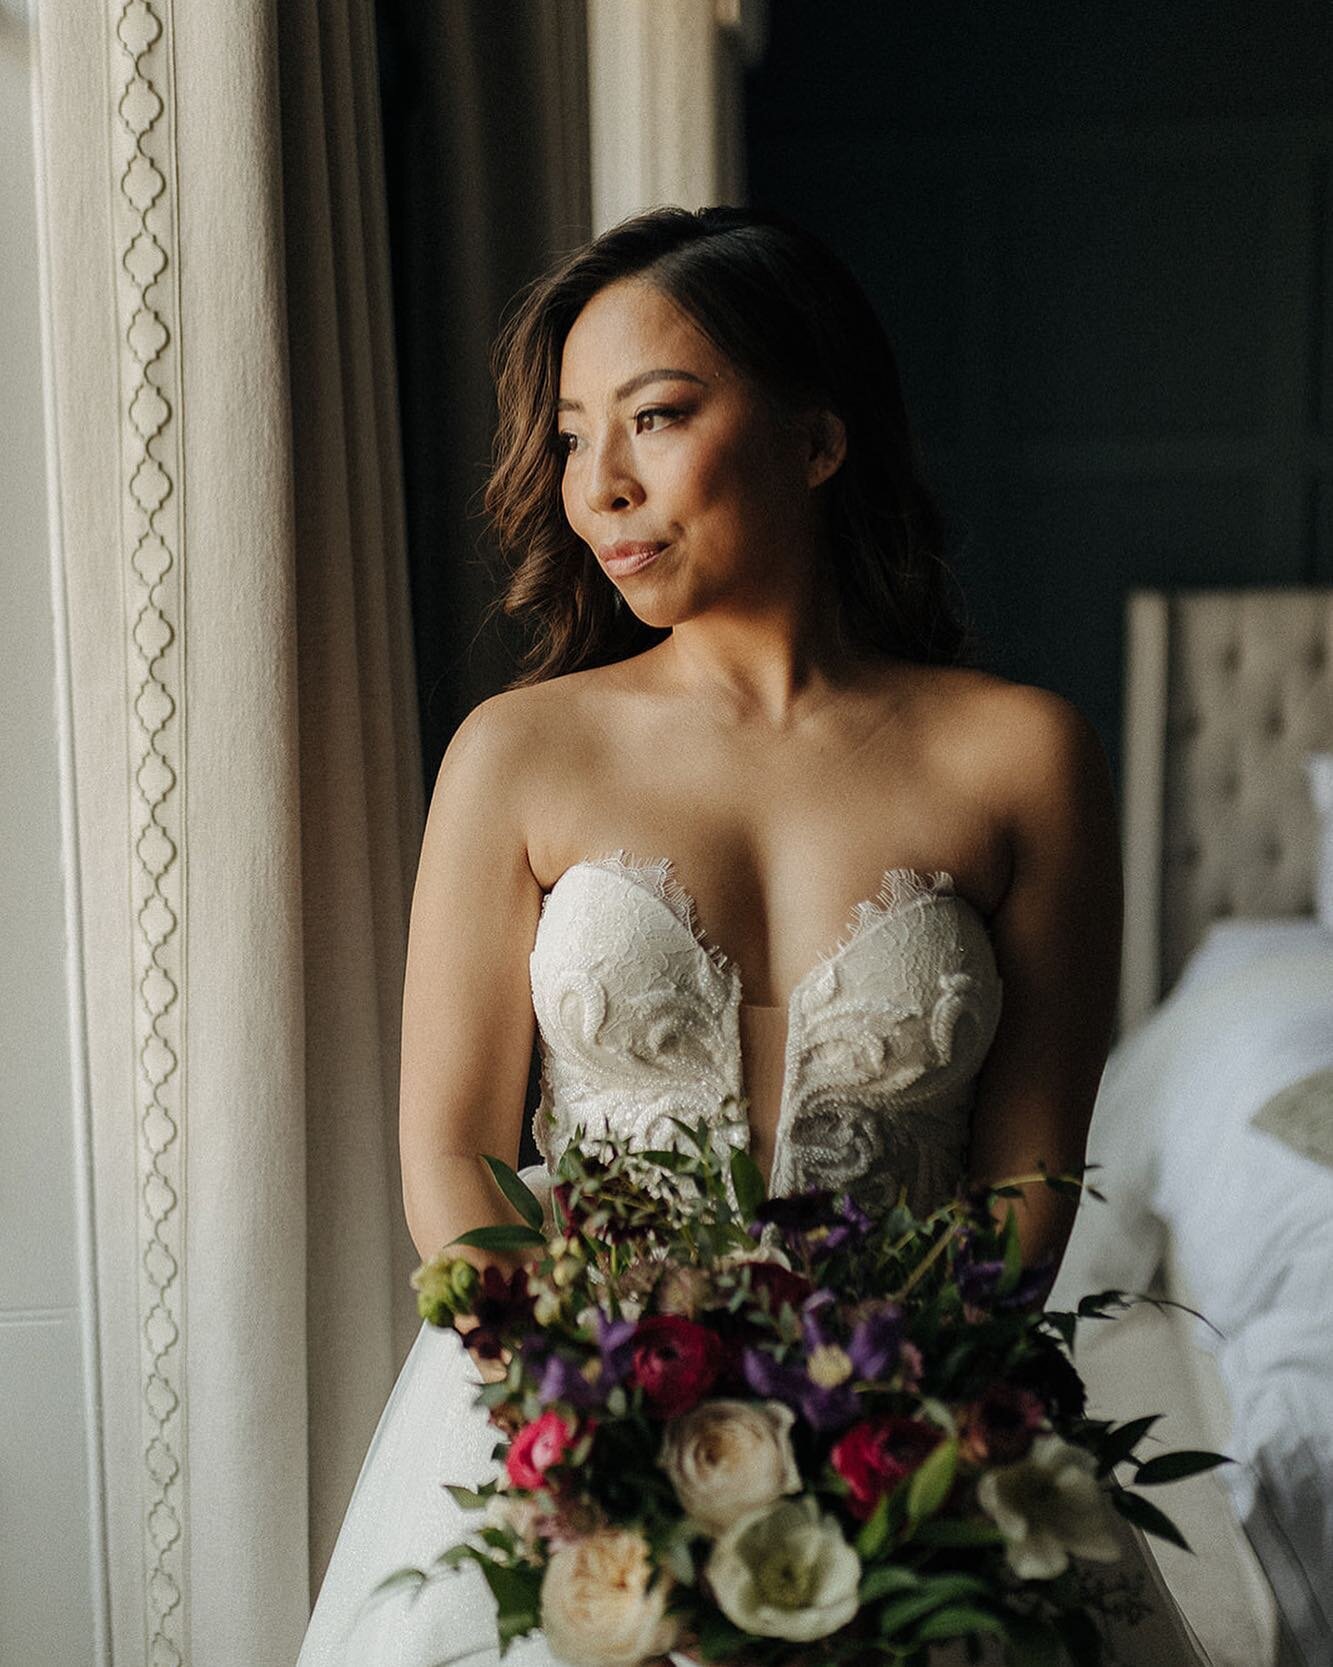 Rachel | The Bride. 🏴󠁧󠁢󠁳󠁣󠁴󠁿

#scottishwedding #glasgowwedding 

Venue: @brigodoonhotel 
Flowers: @fleuressence__ 
MUA: @rachellouisemakeupartist 
Planning: @clementineweddings 
Videography: @chriskellyfilms